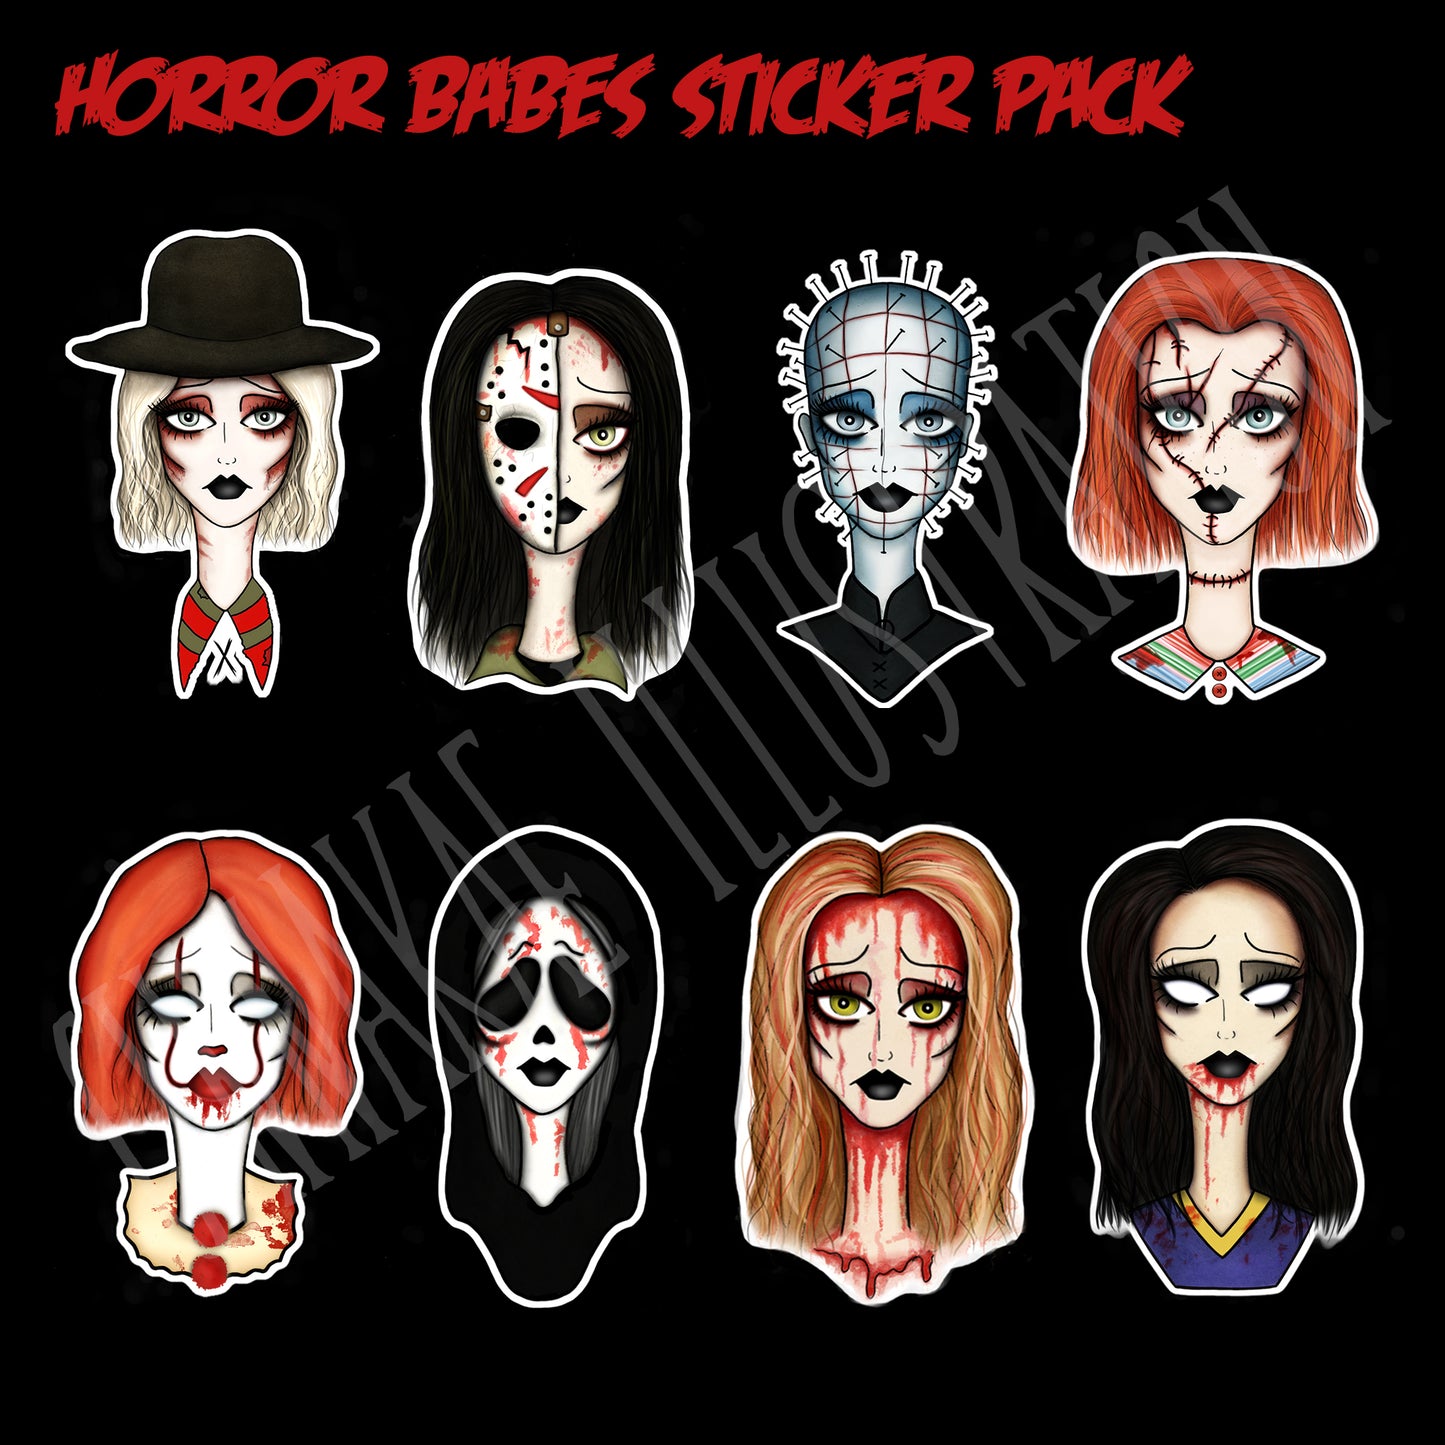 Horror Babes Sticker Pack